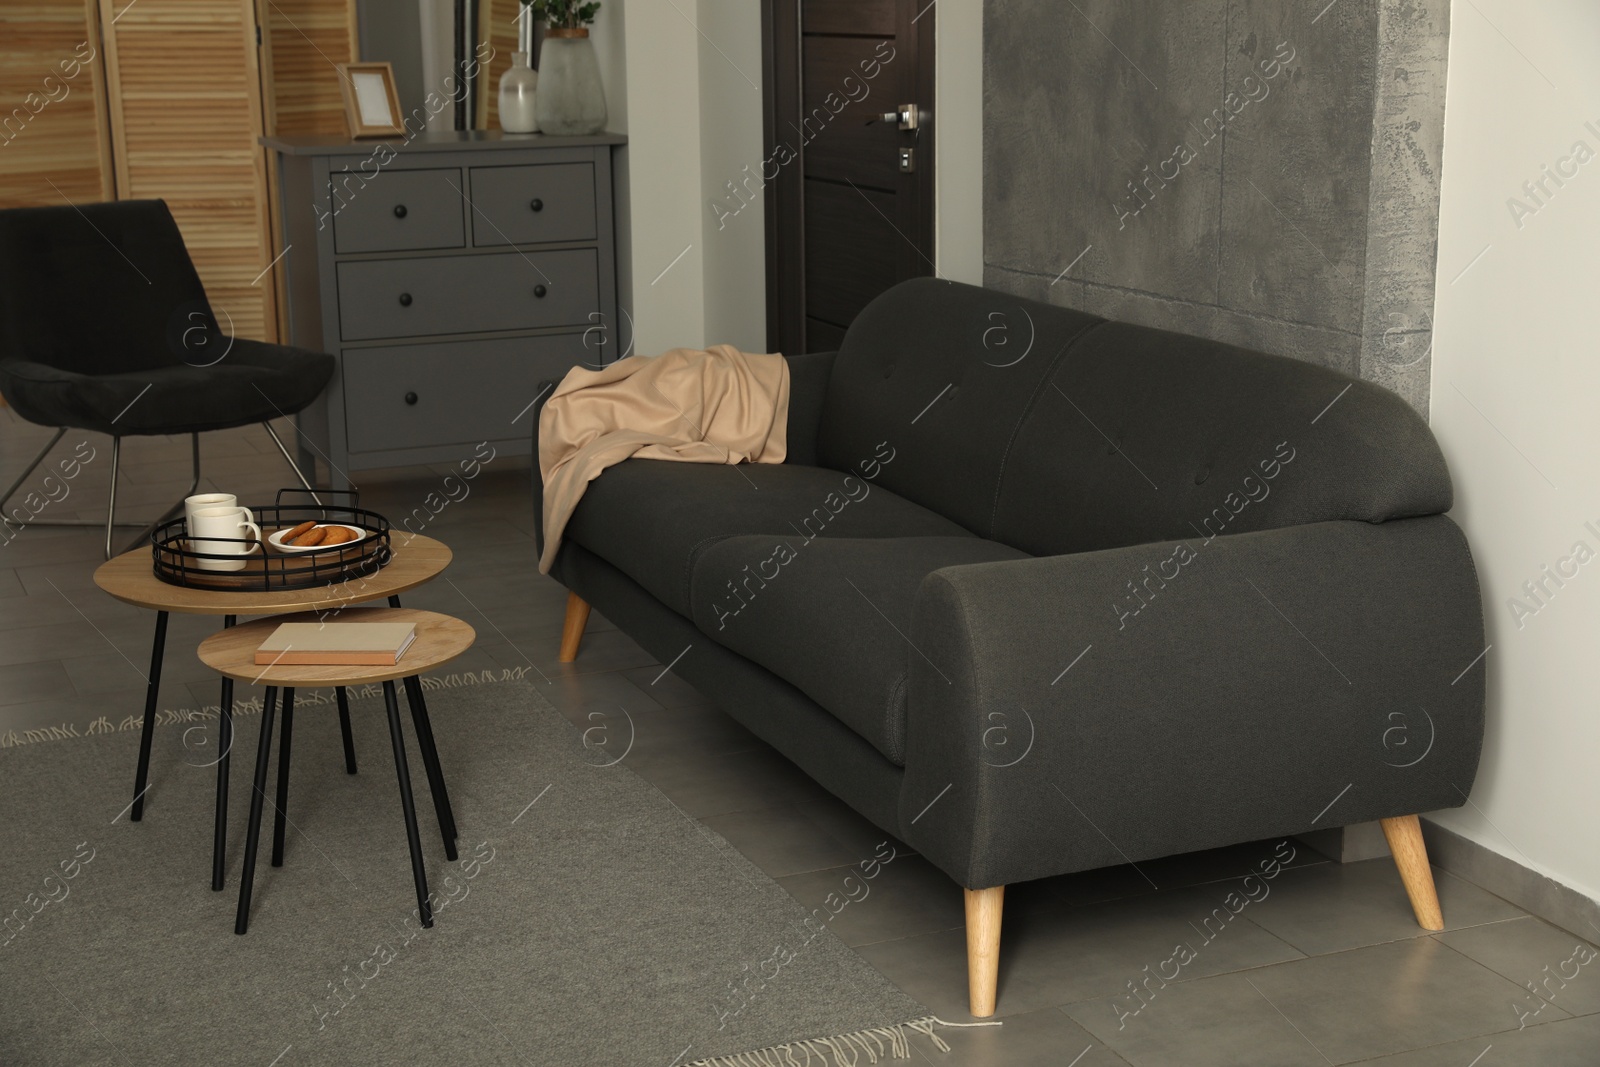 Photo of Stylish living room interior with comfortable grey sofa